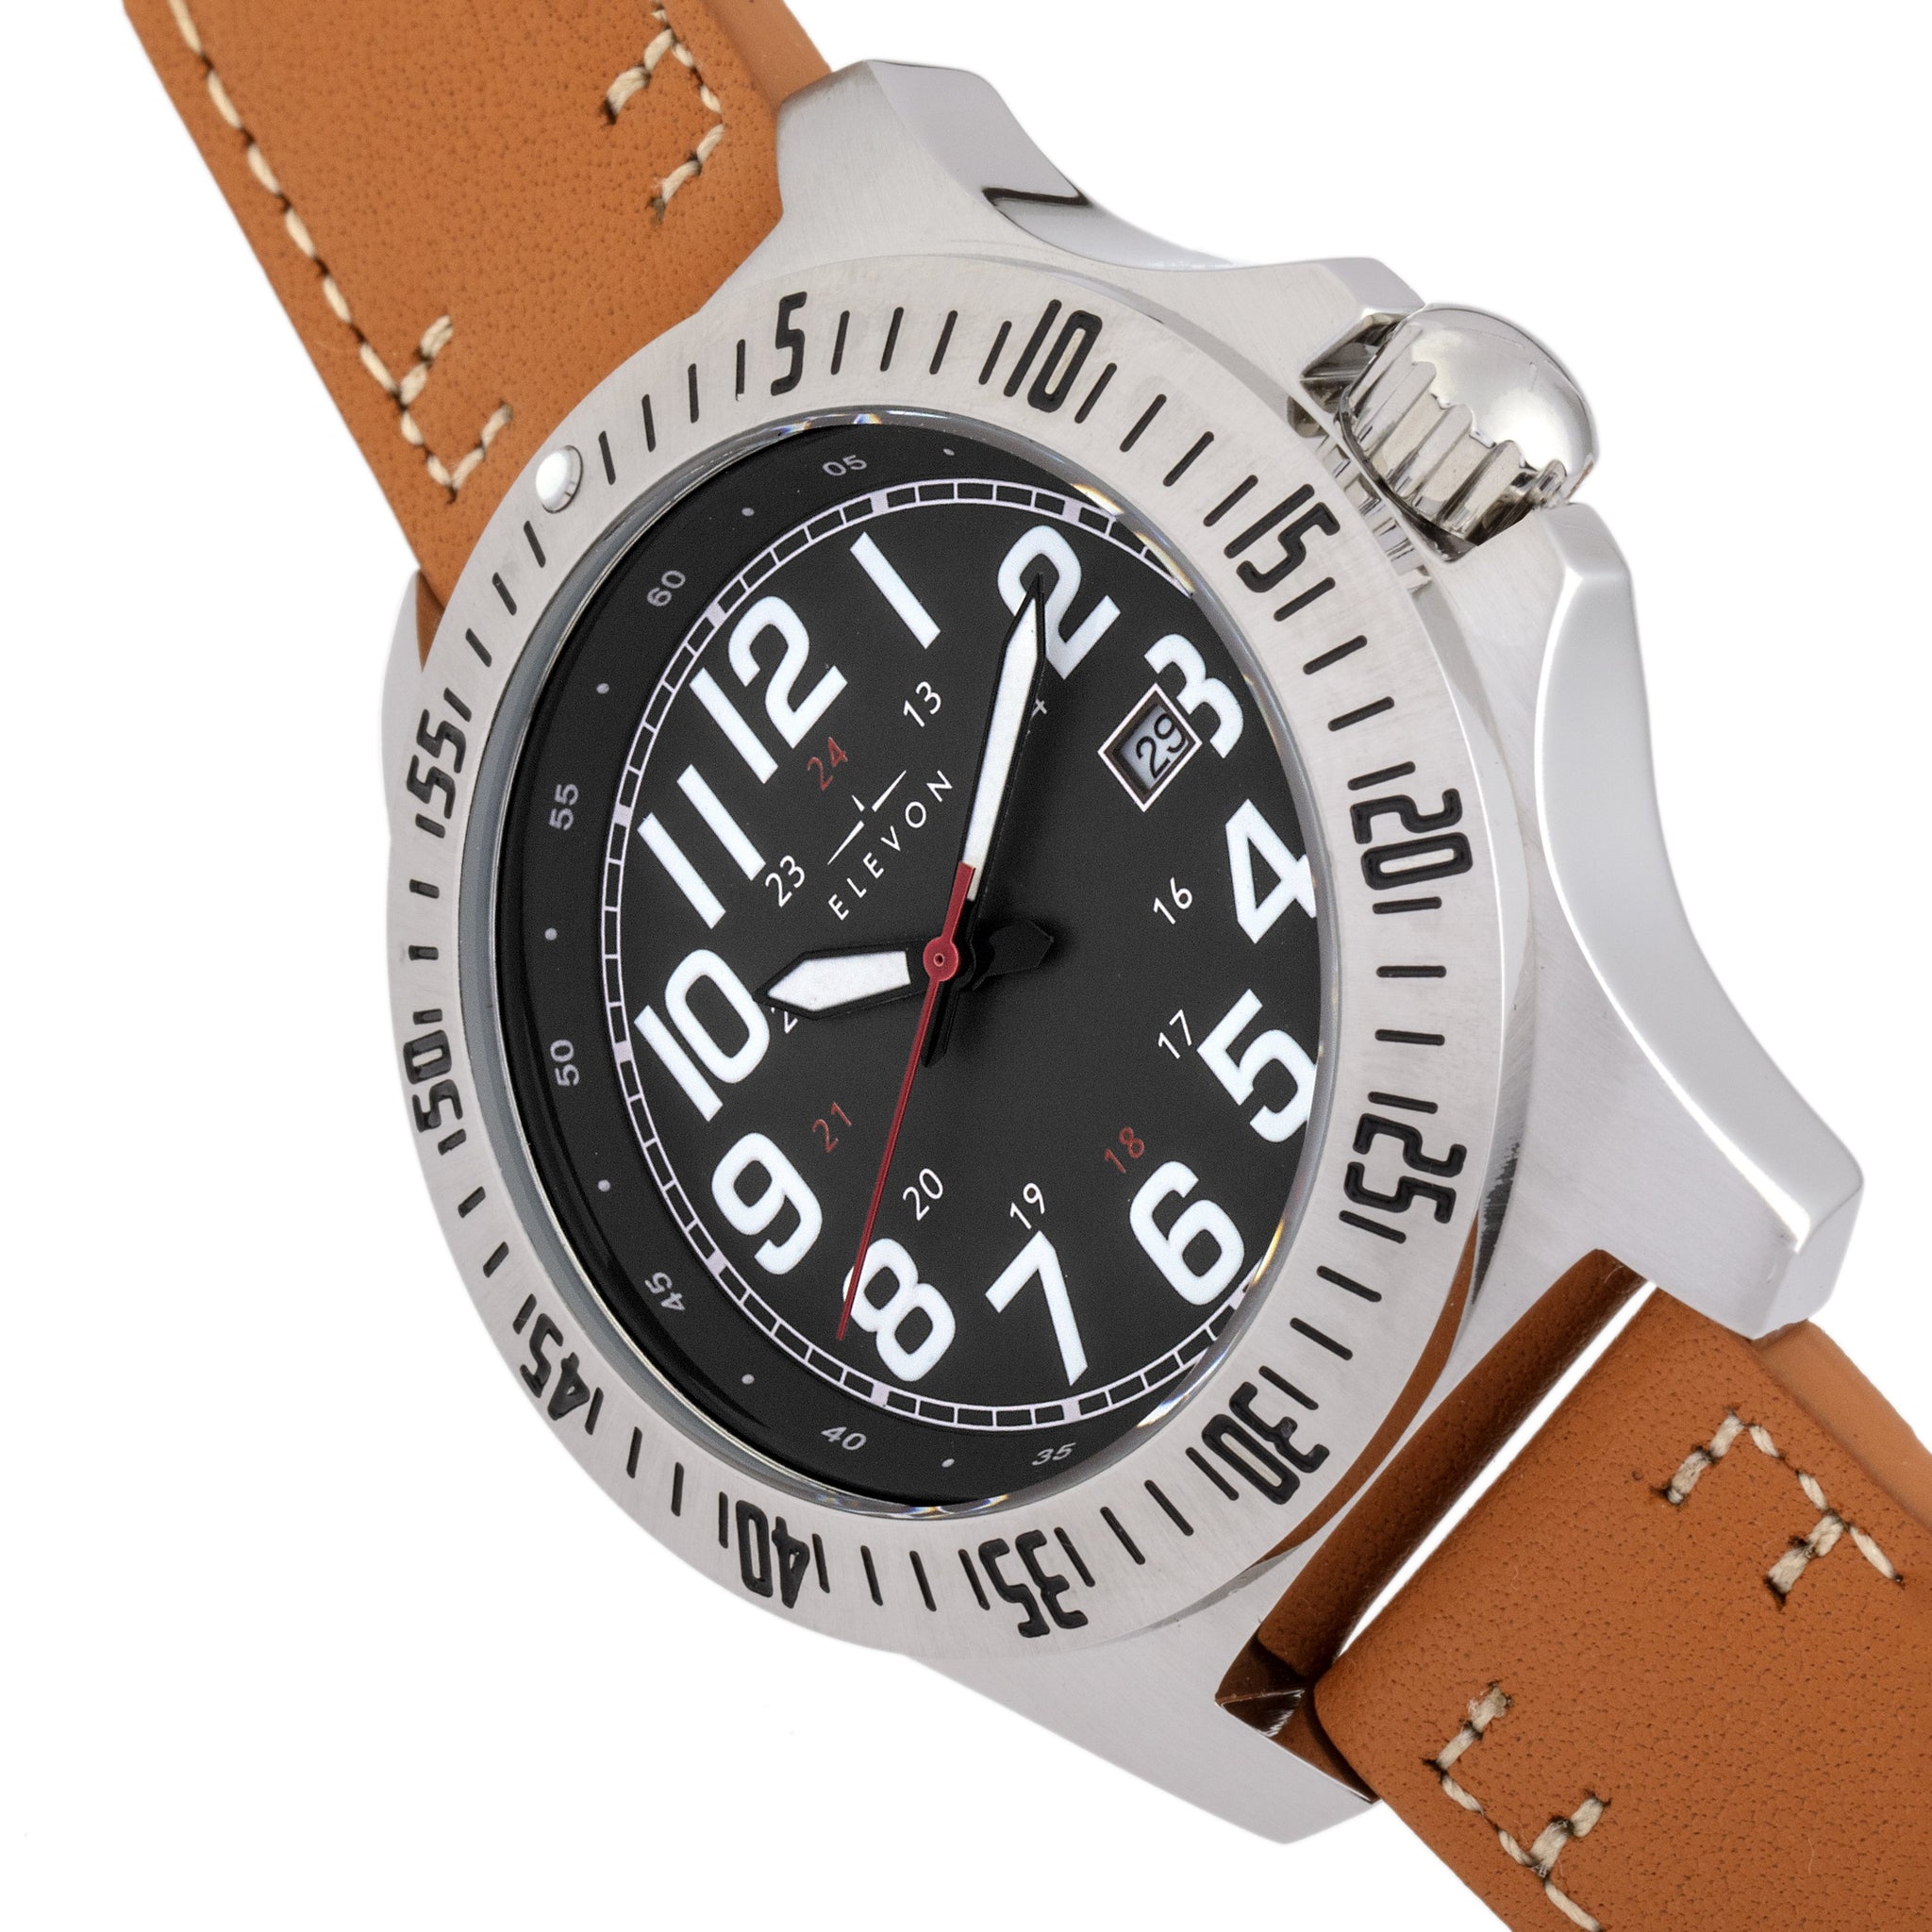 Elevon Aviator Leather-Band Watch w/Date - Camel/Black - ELE120-15